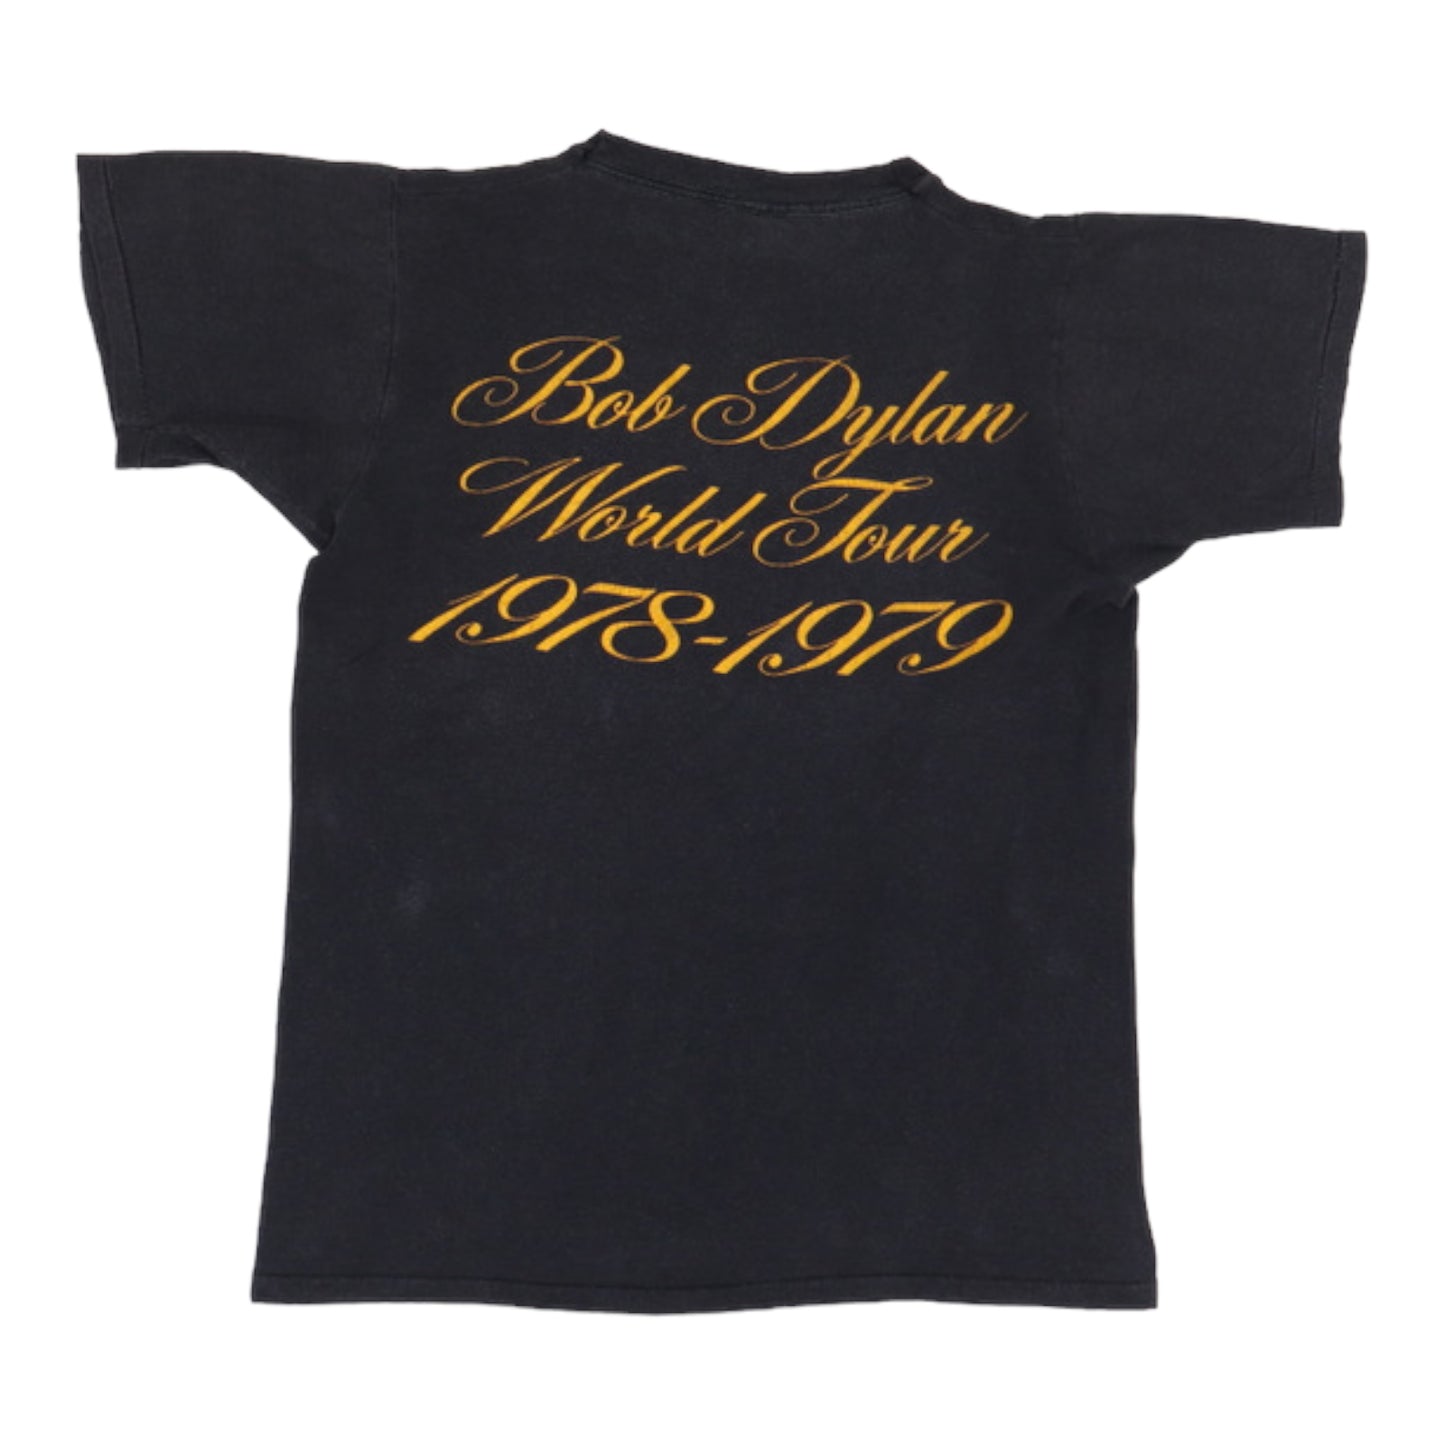 1979 Bob Dylan World Tour Shirt